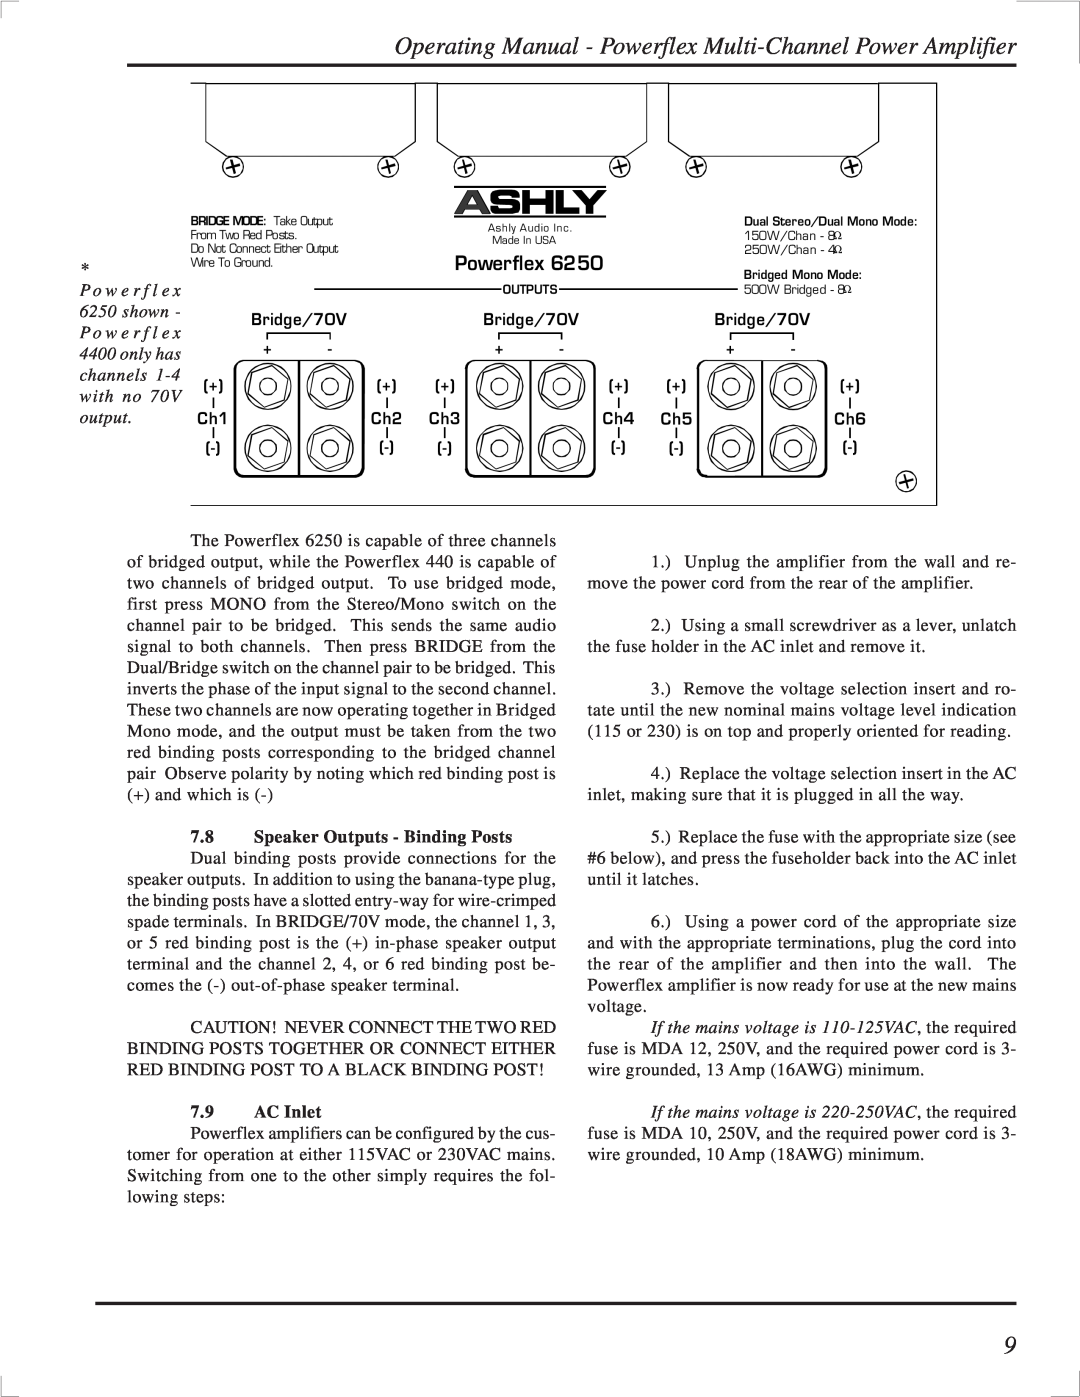 Ashly TRA-4150 manual Powerflex, 7.9AC Inlet 